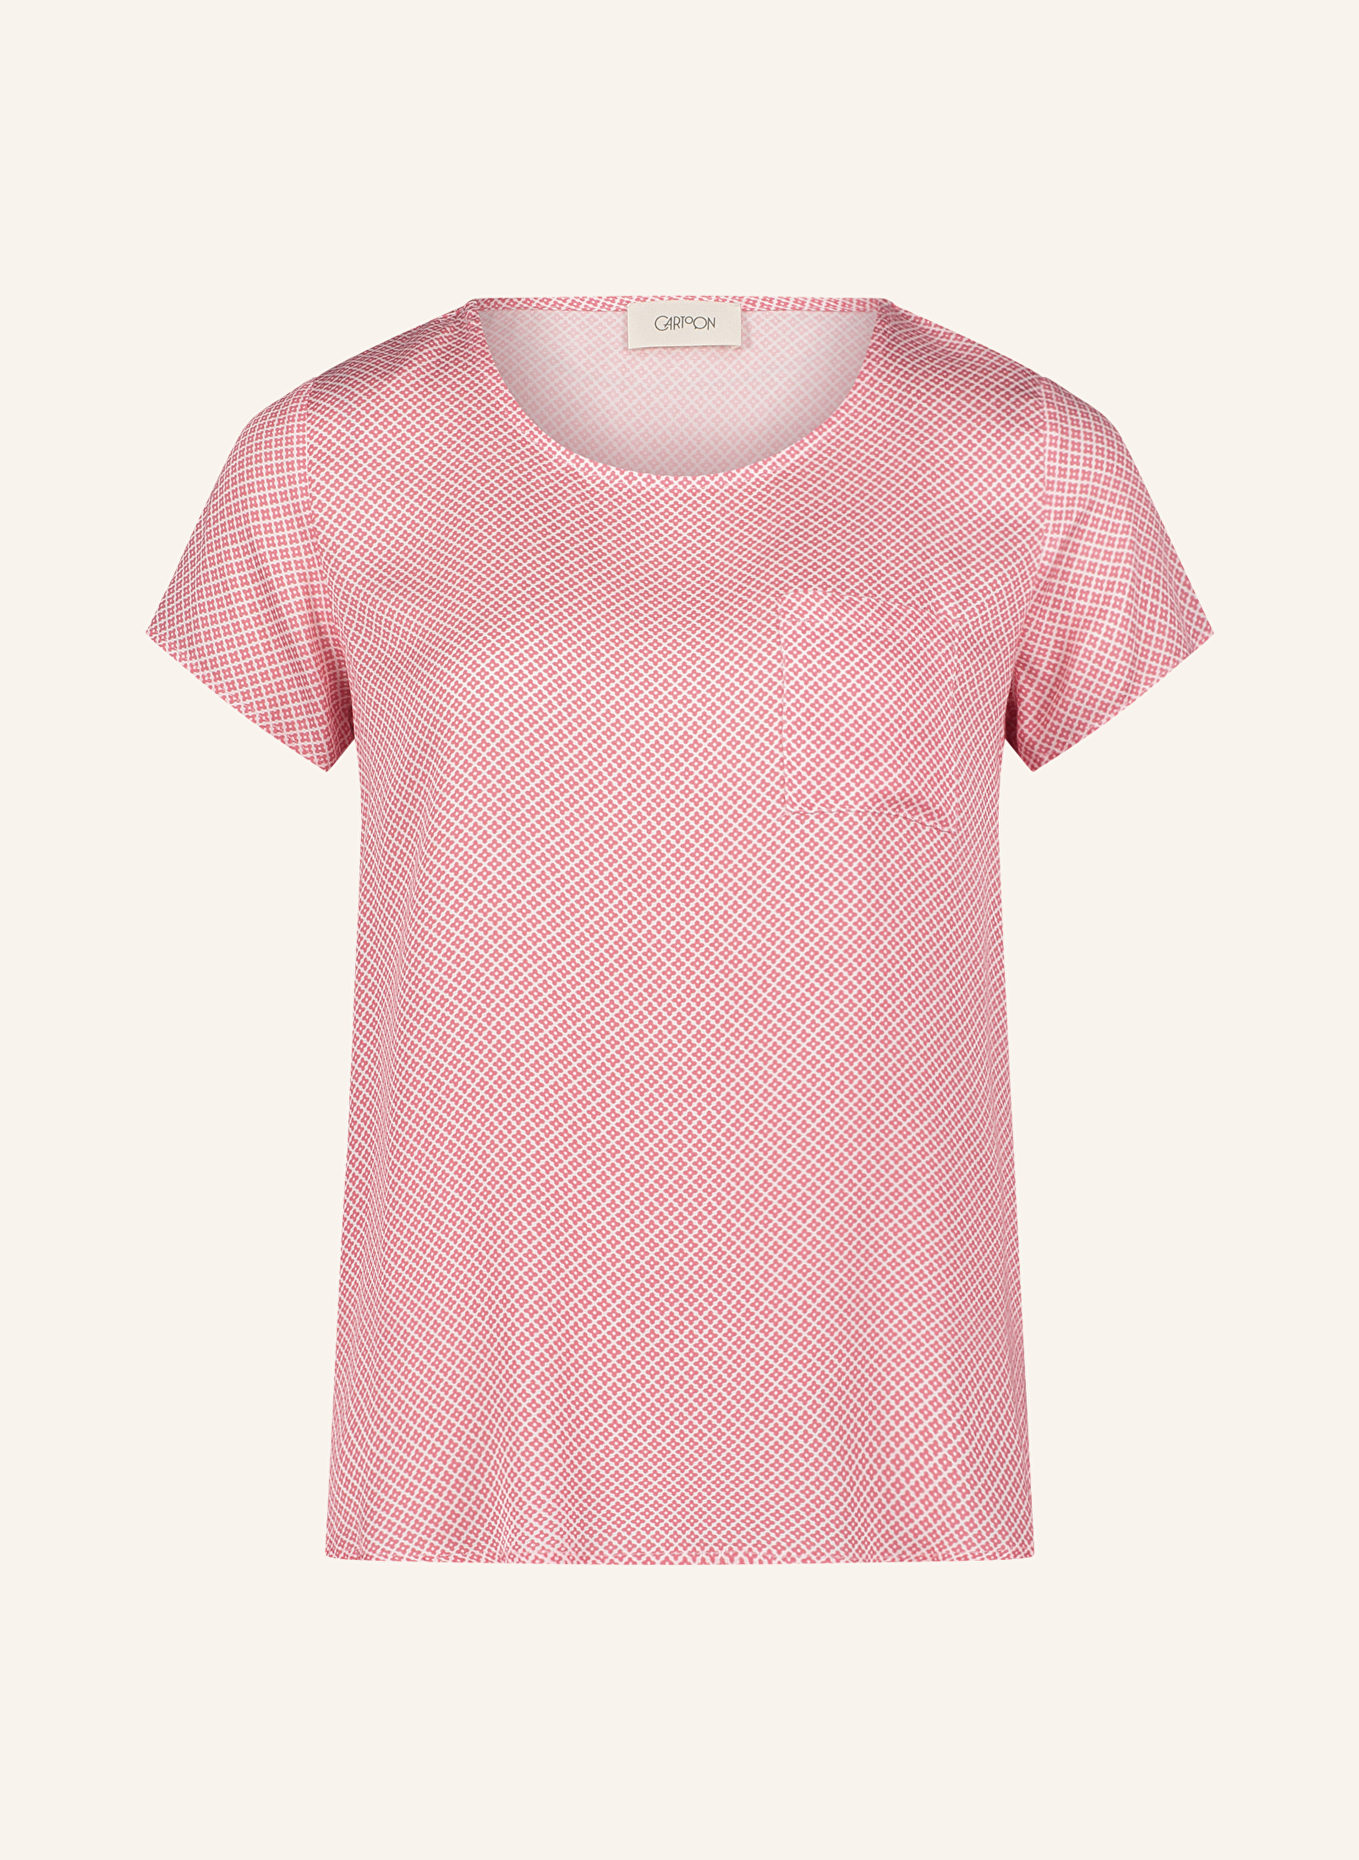 CARTOON Blusenshirt, Farbe: CREME/ PINK (Bild 1)